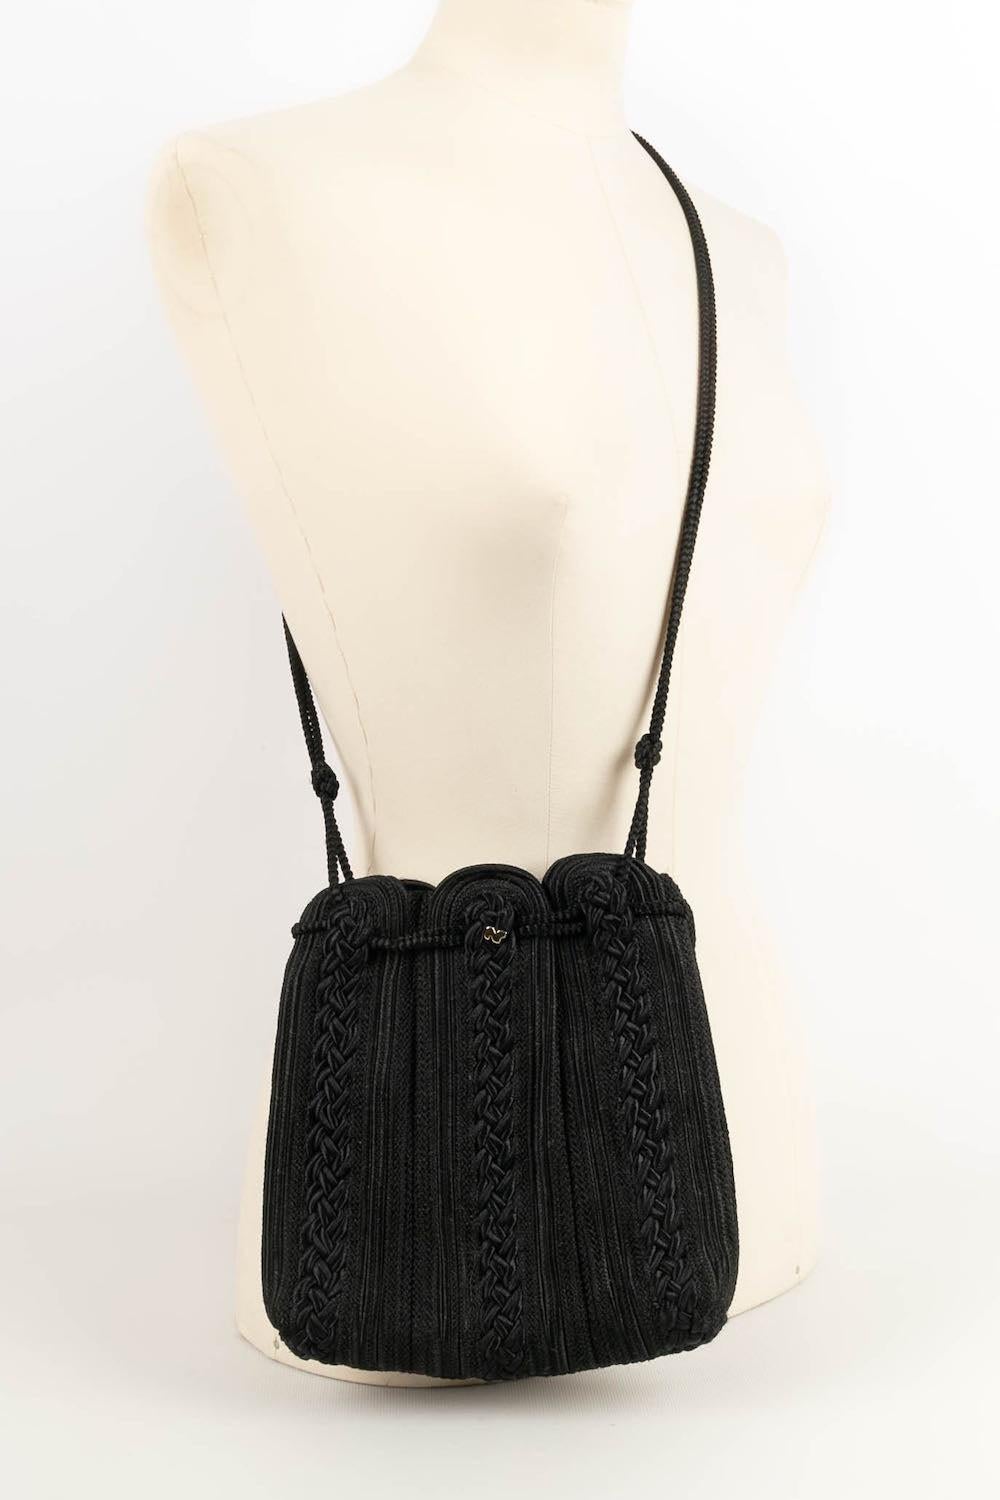 Nina Ricci Black Passementerie Bag For Sale 3